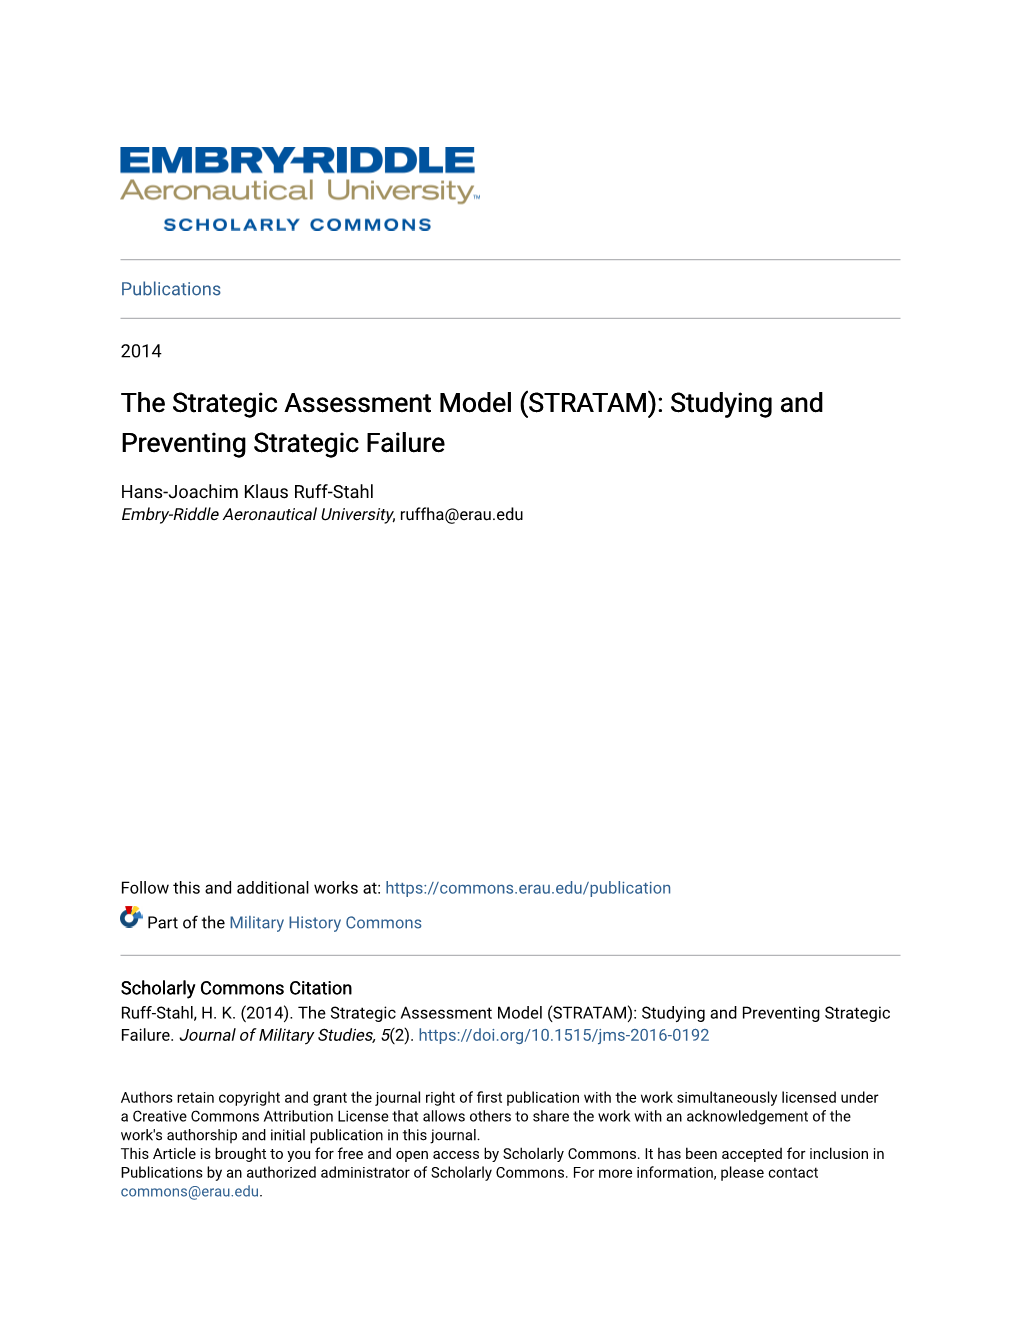 The Strategic Assessment Model (STRATAM): Studying and Preventing Strategic Failure